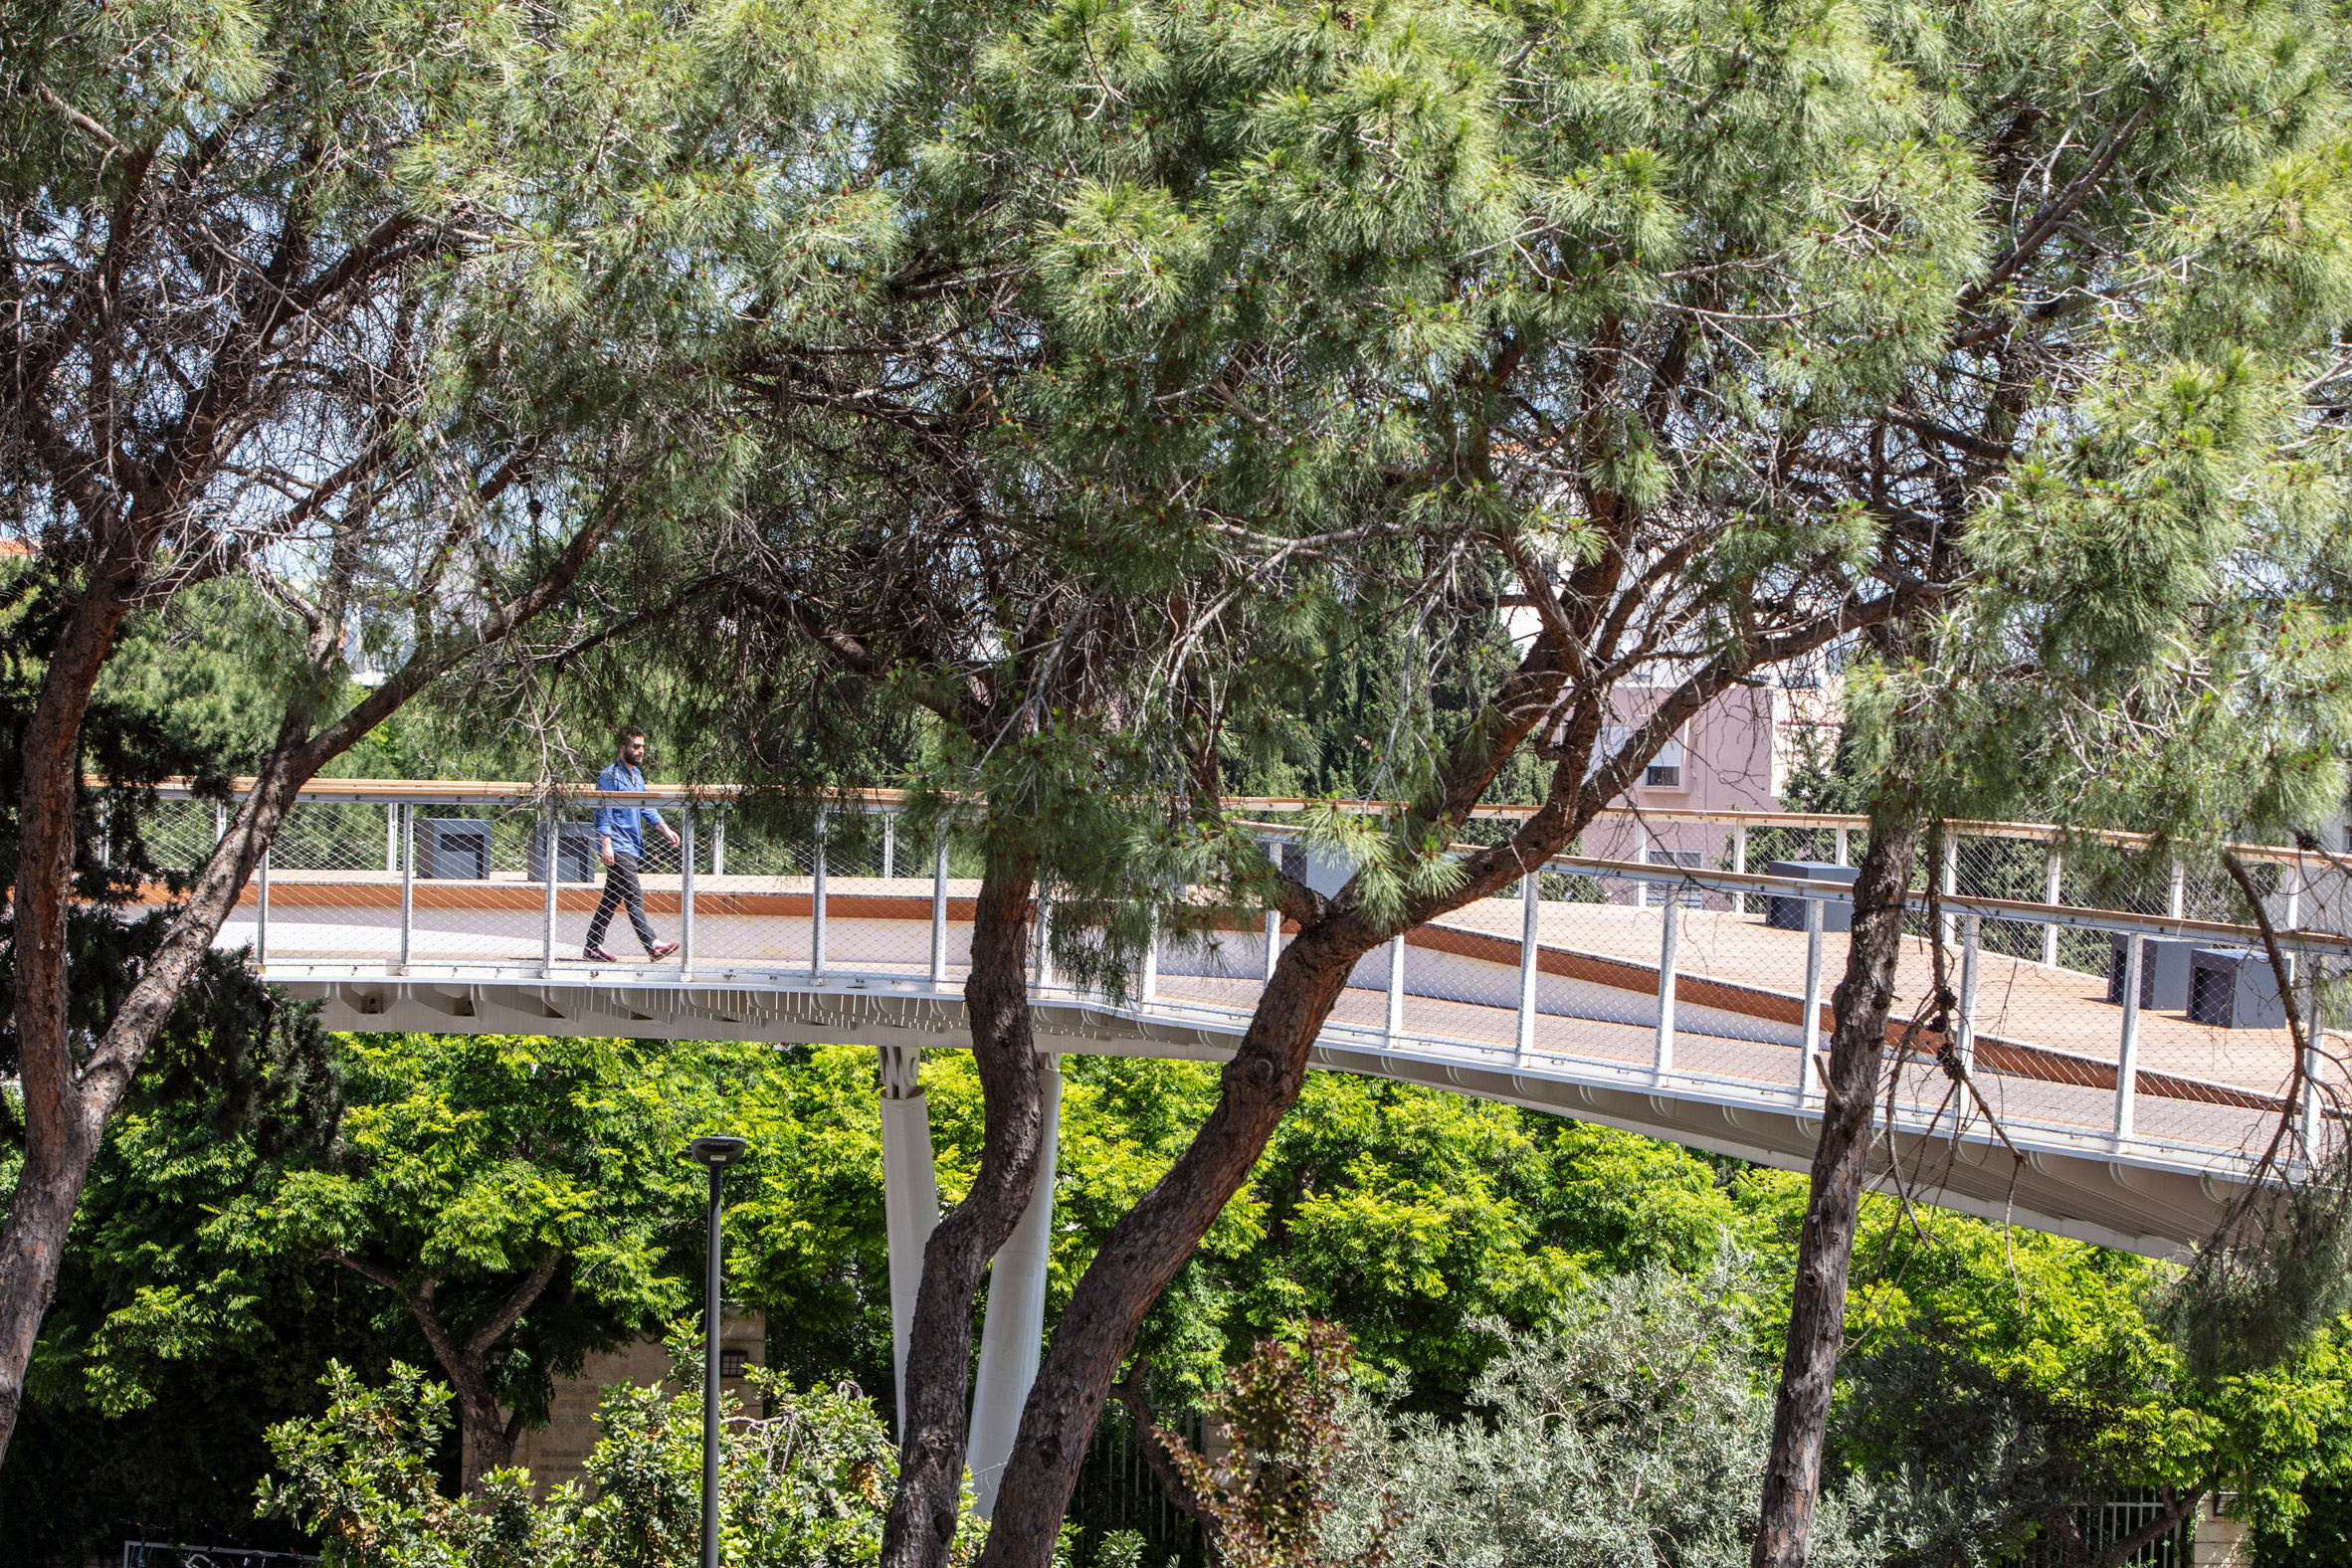 Eye-level view of the Technion Entrance Gate bridge amongst the trees